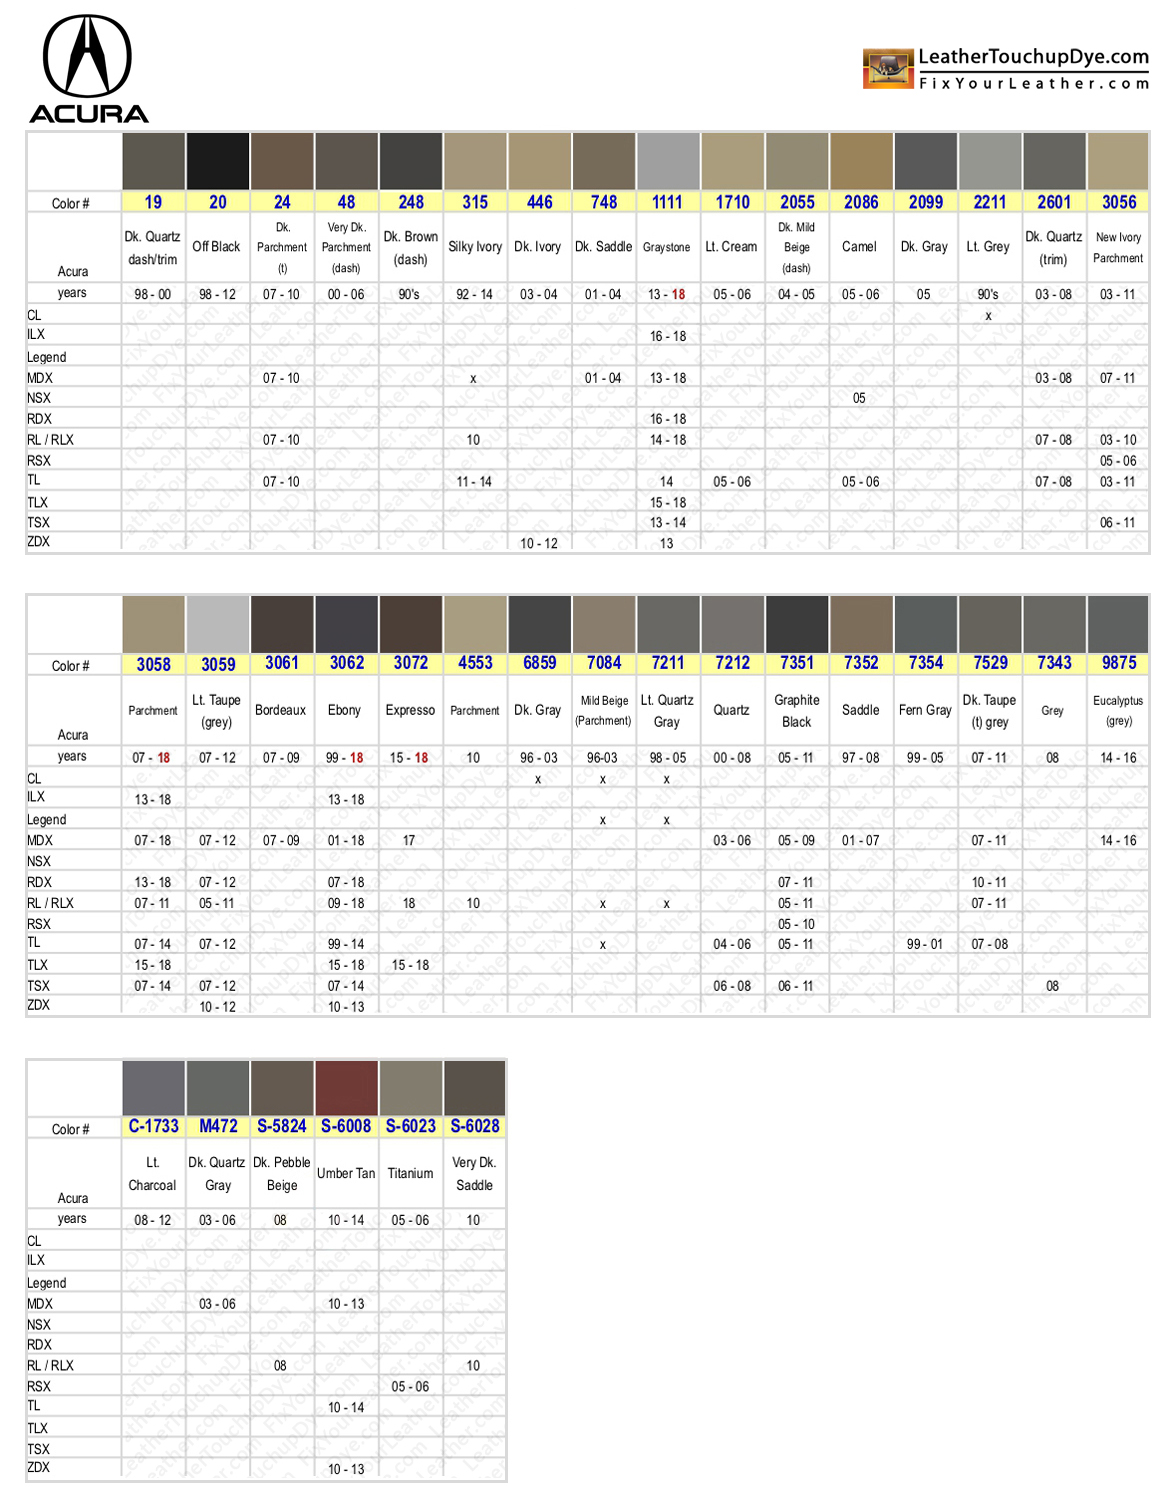 Audi Leather Colour Chart